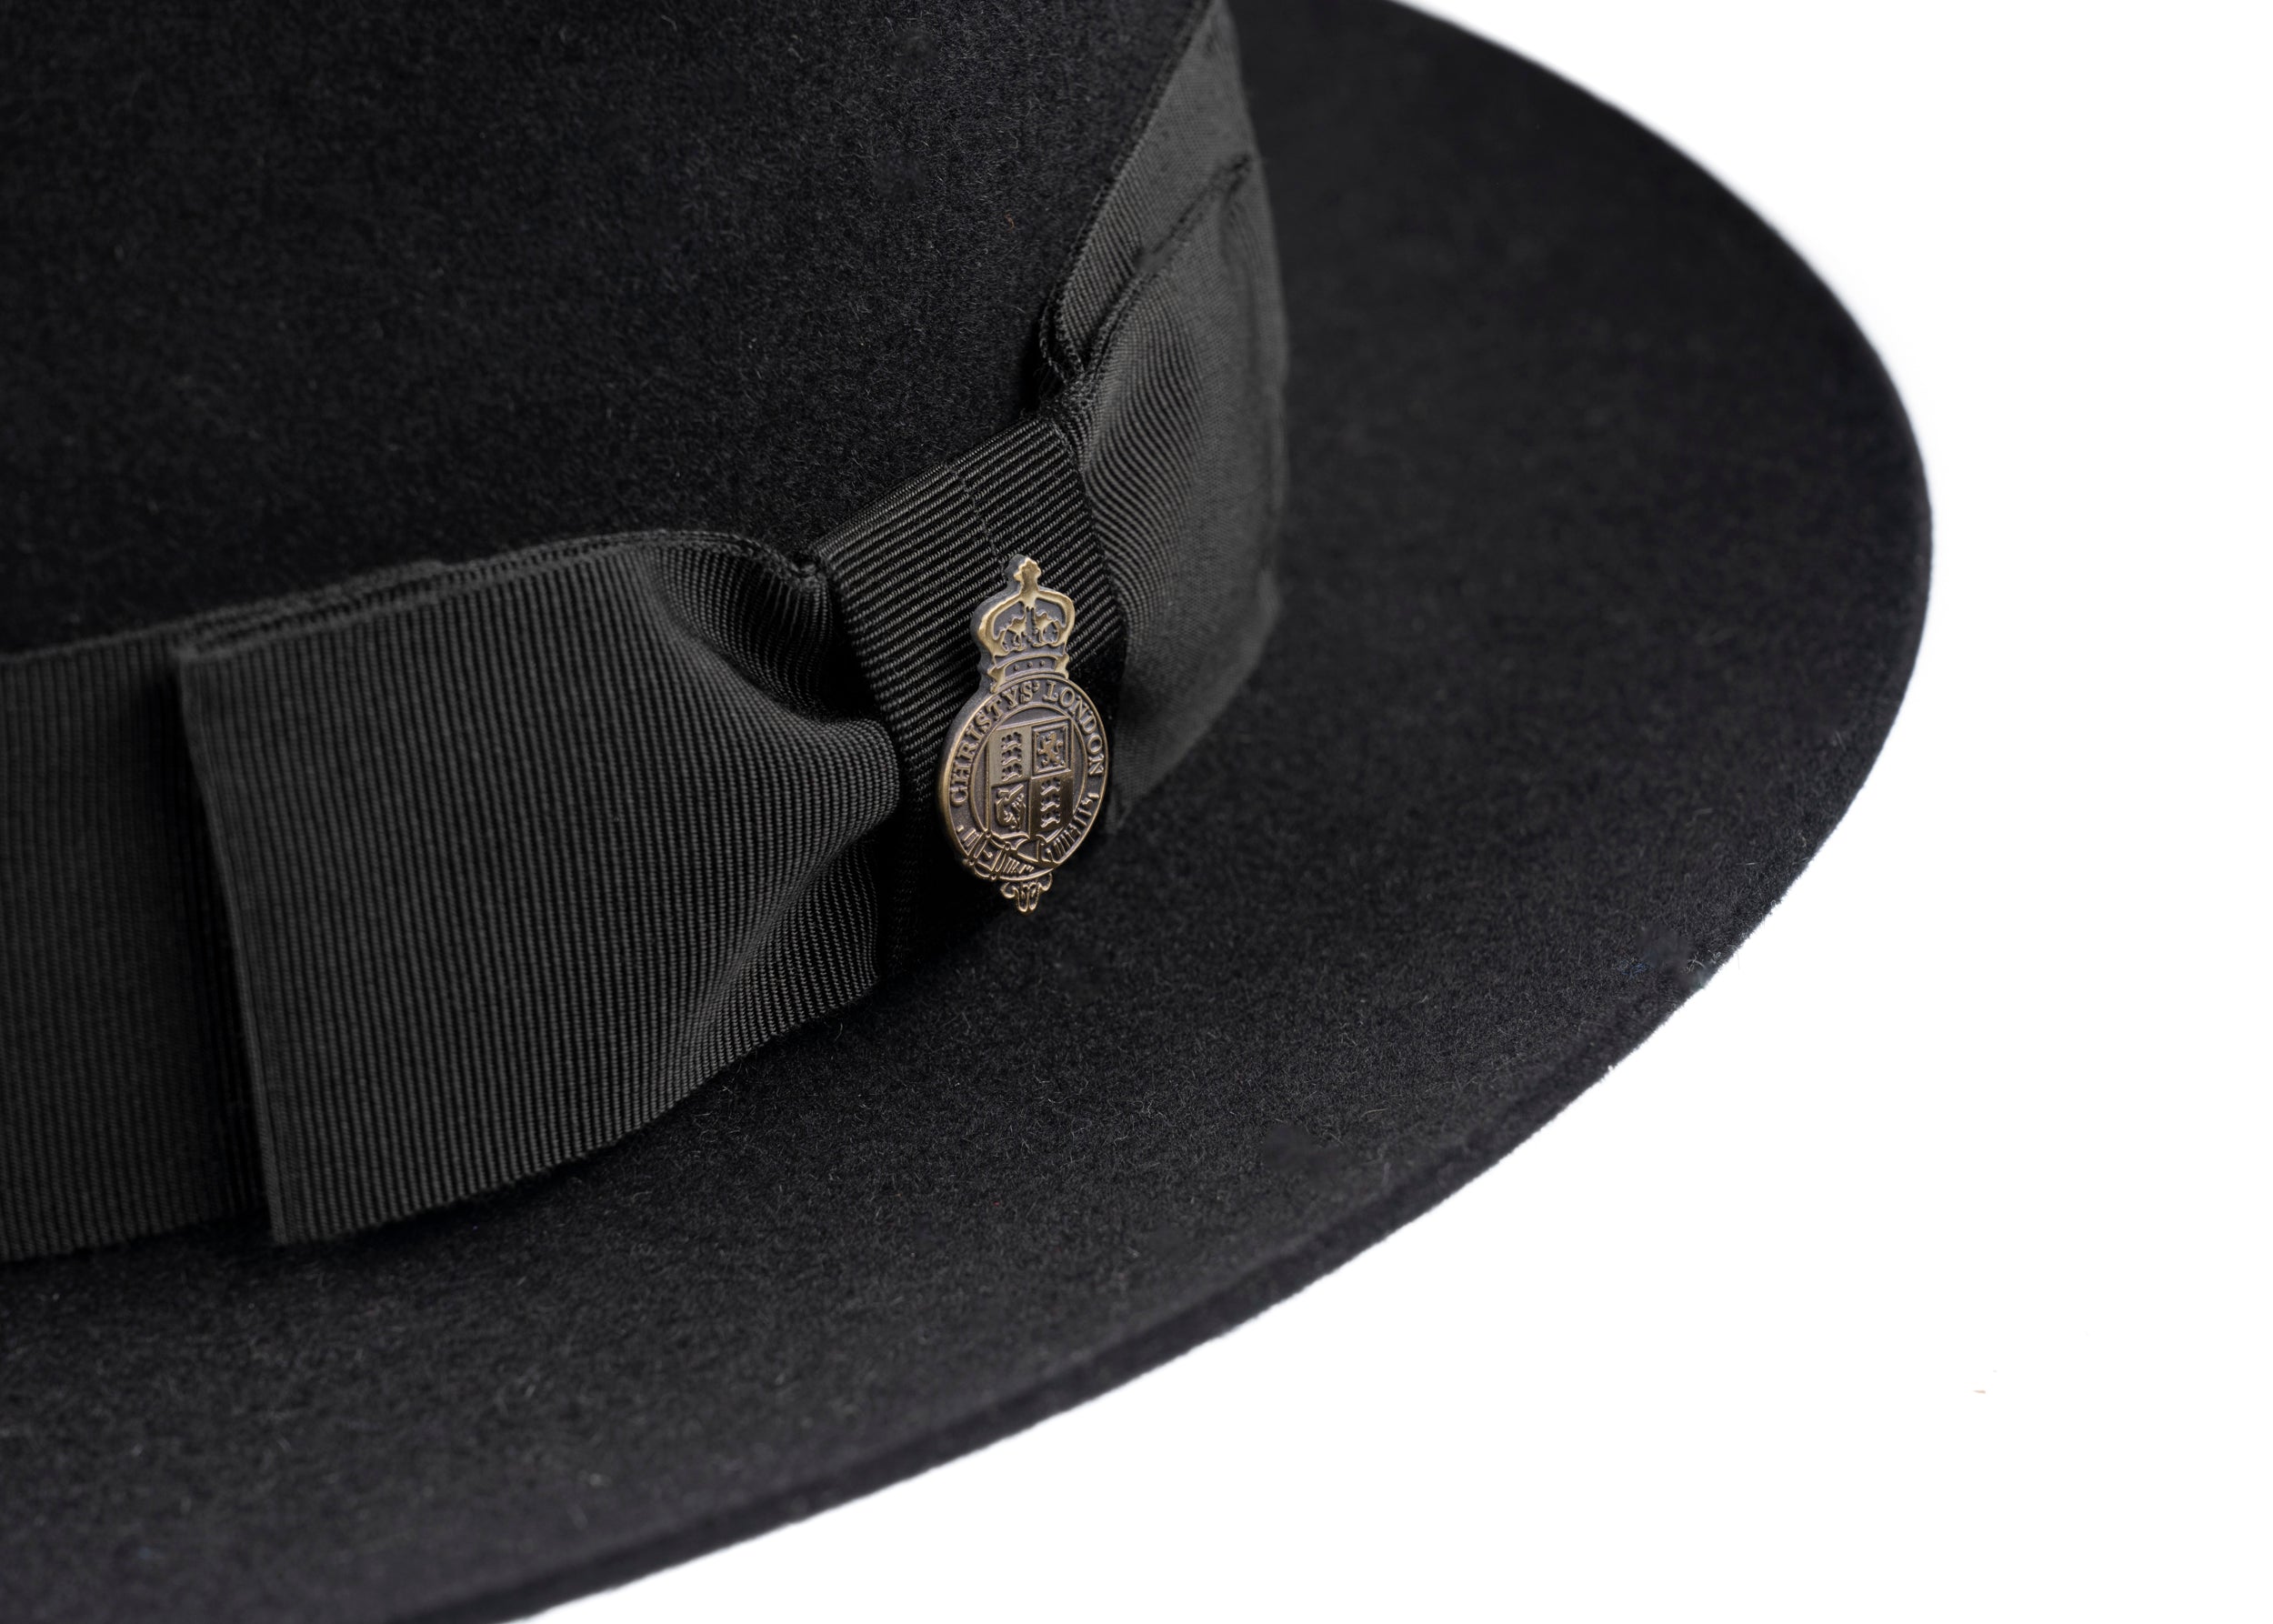 Trilby Hat, Men Hats, Black Fur Felt Hat, Handmade Classic Hat